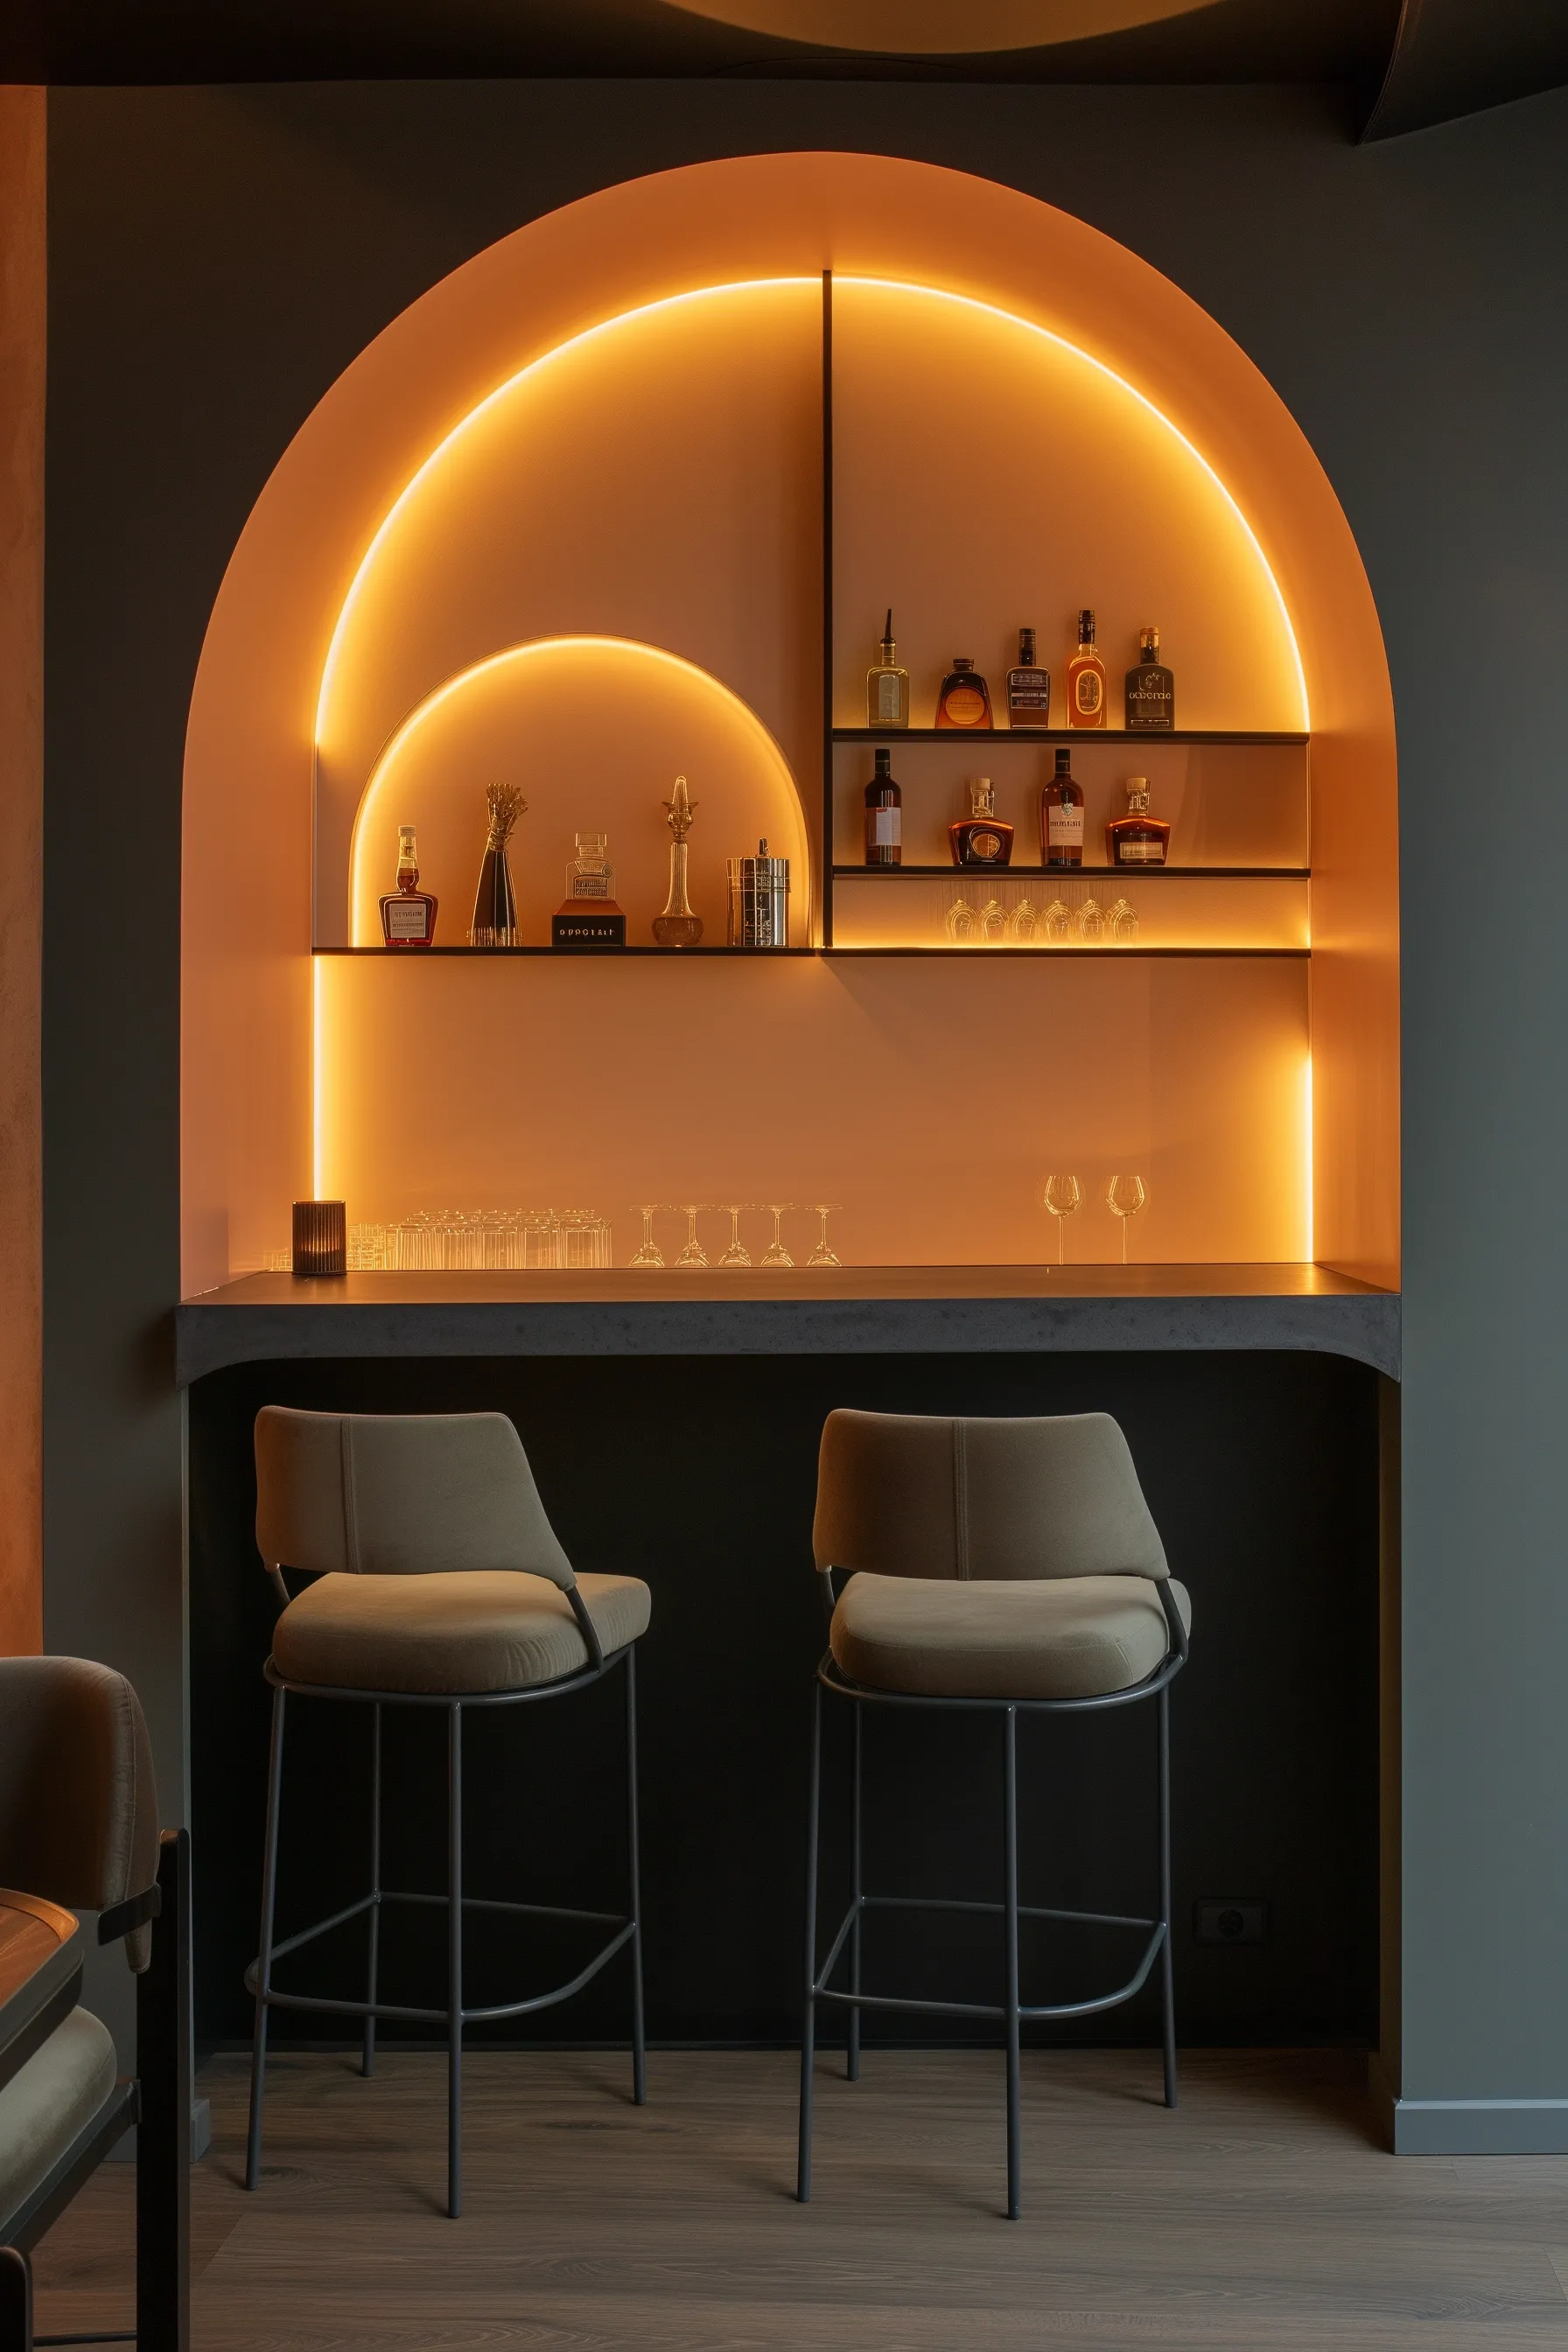 A circular bar shelf with LED lights